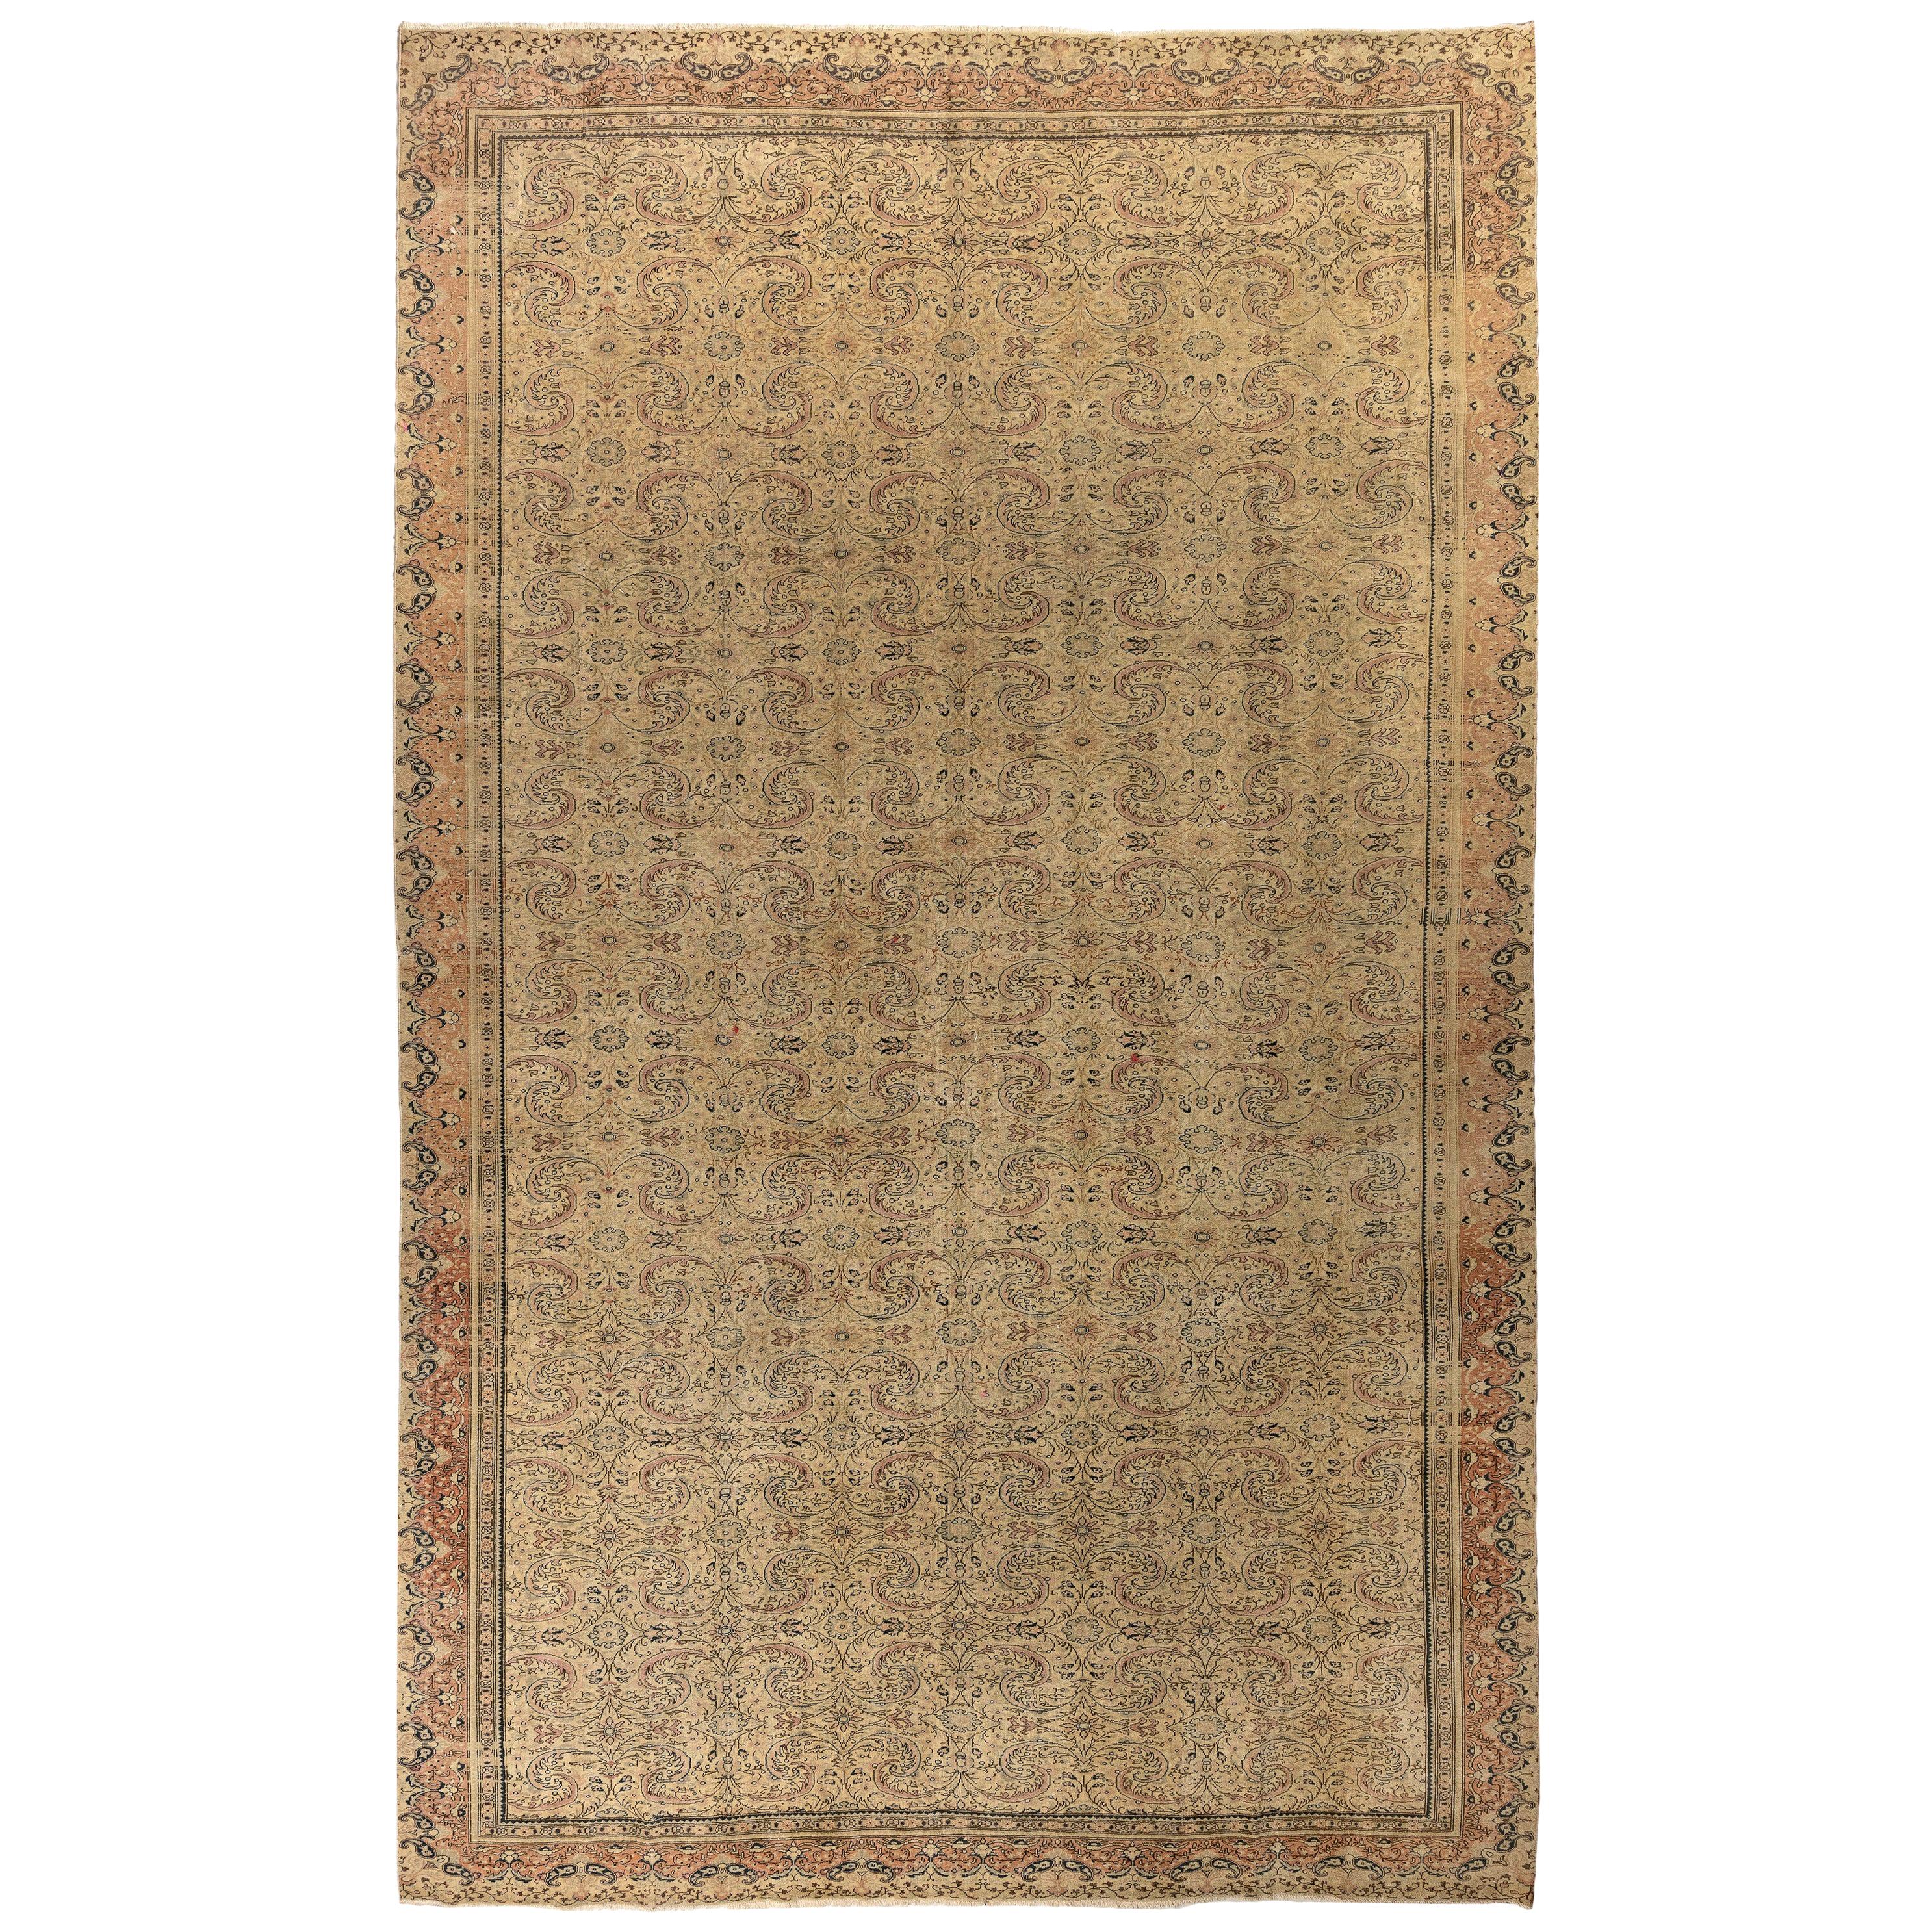 10x13.7 Ft Very Fine Vintage Turkish Sivas Rug, Wool Carpet, Floor Covering For Sale